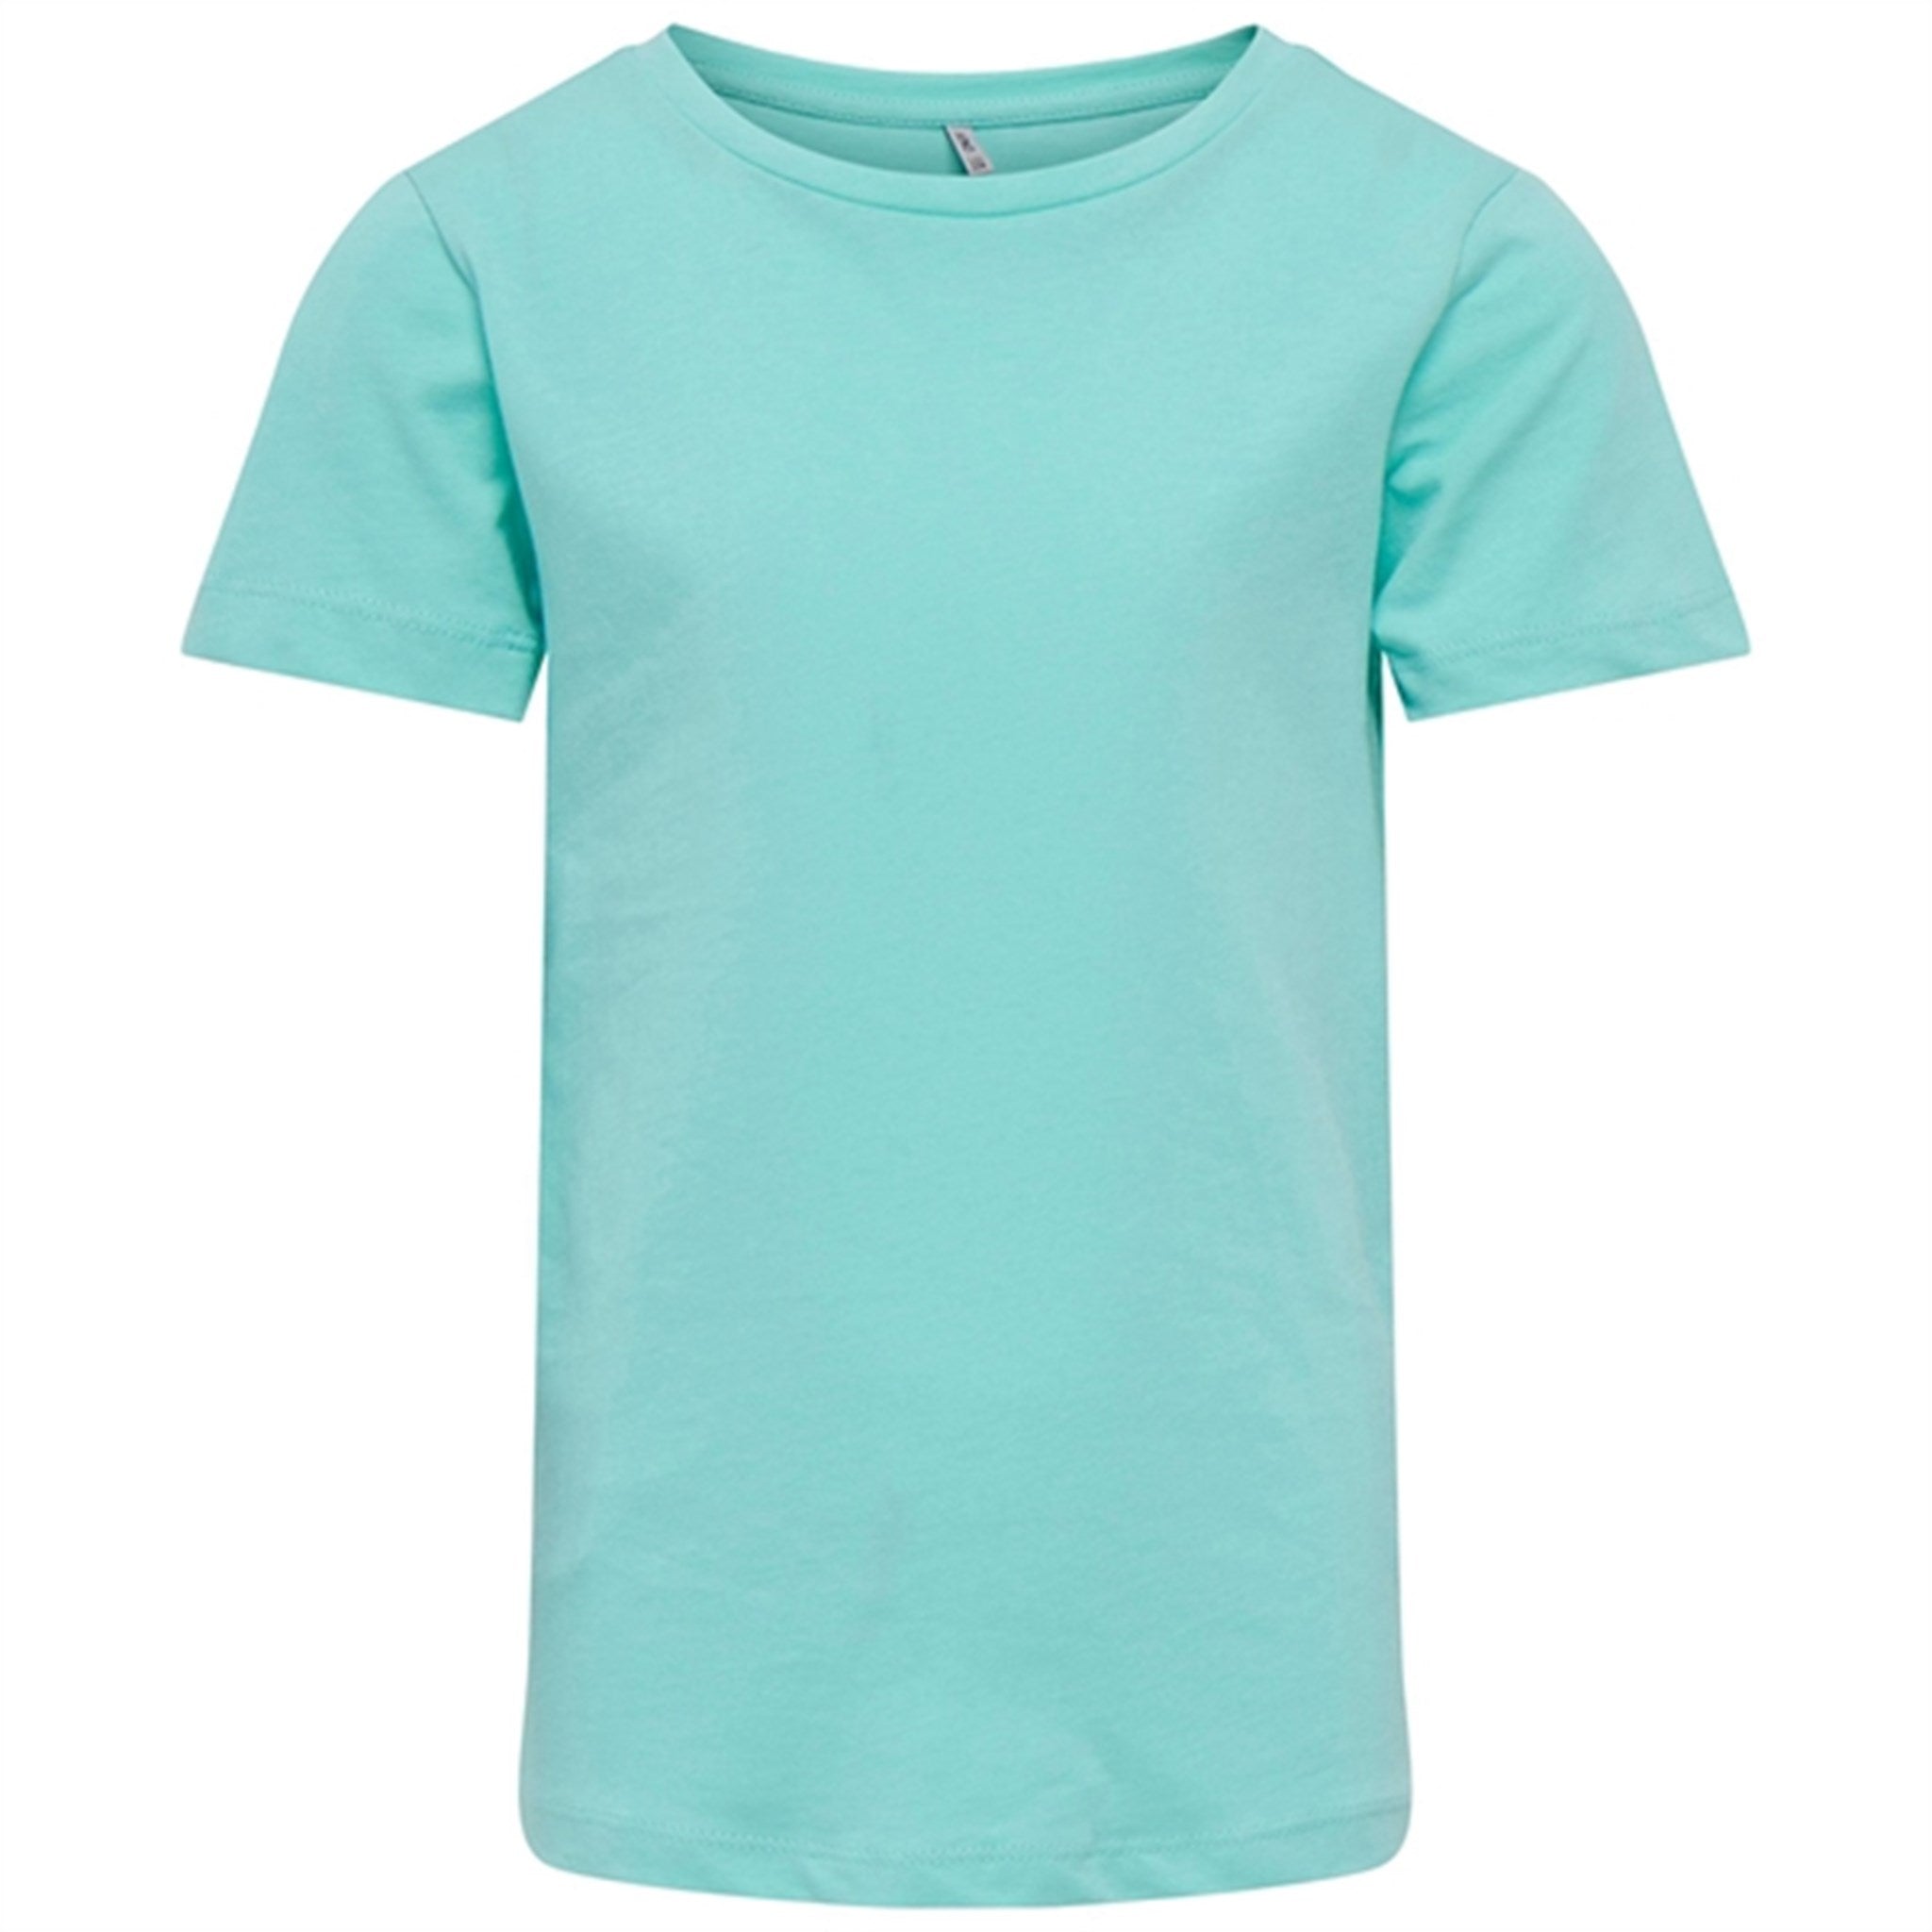 Kids ONLY Aruba Blue New Only T-Shirt Noos